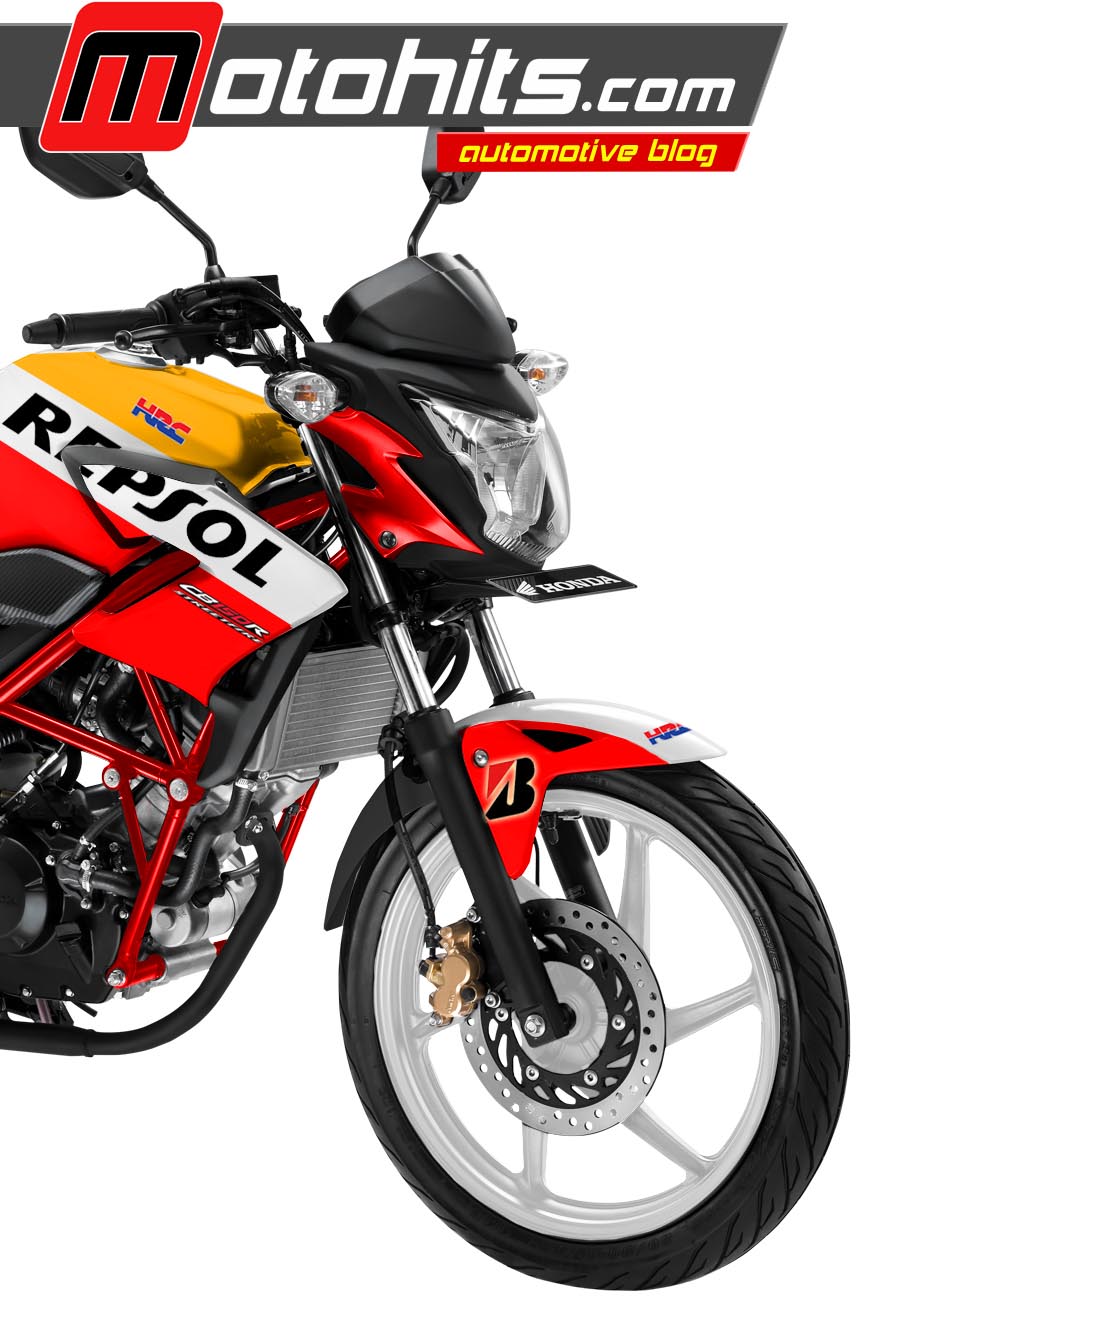 Pojok Modifikasi Honda Cb150r Sf Repsol Edition Motohitscom